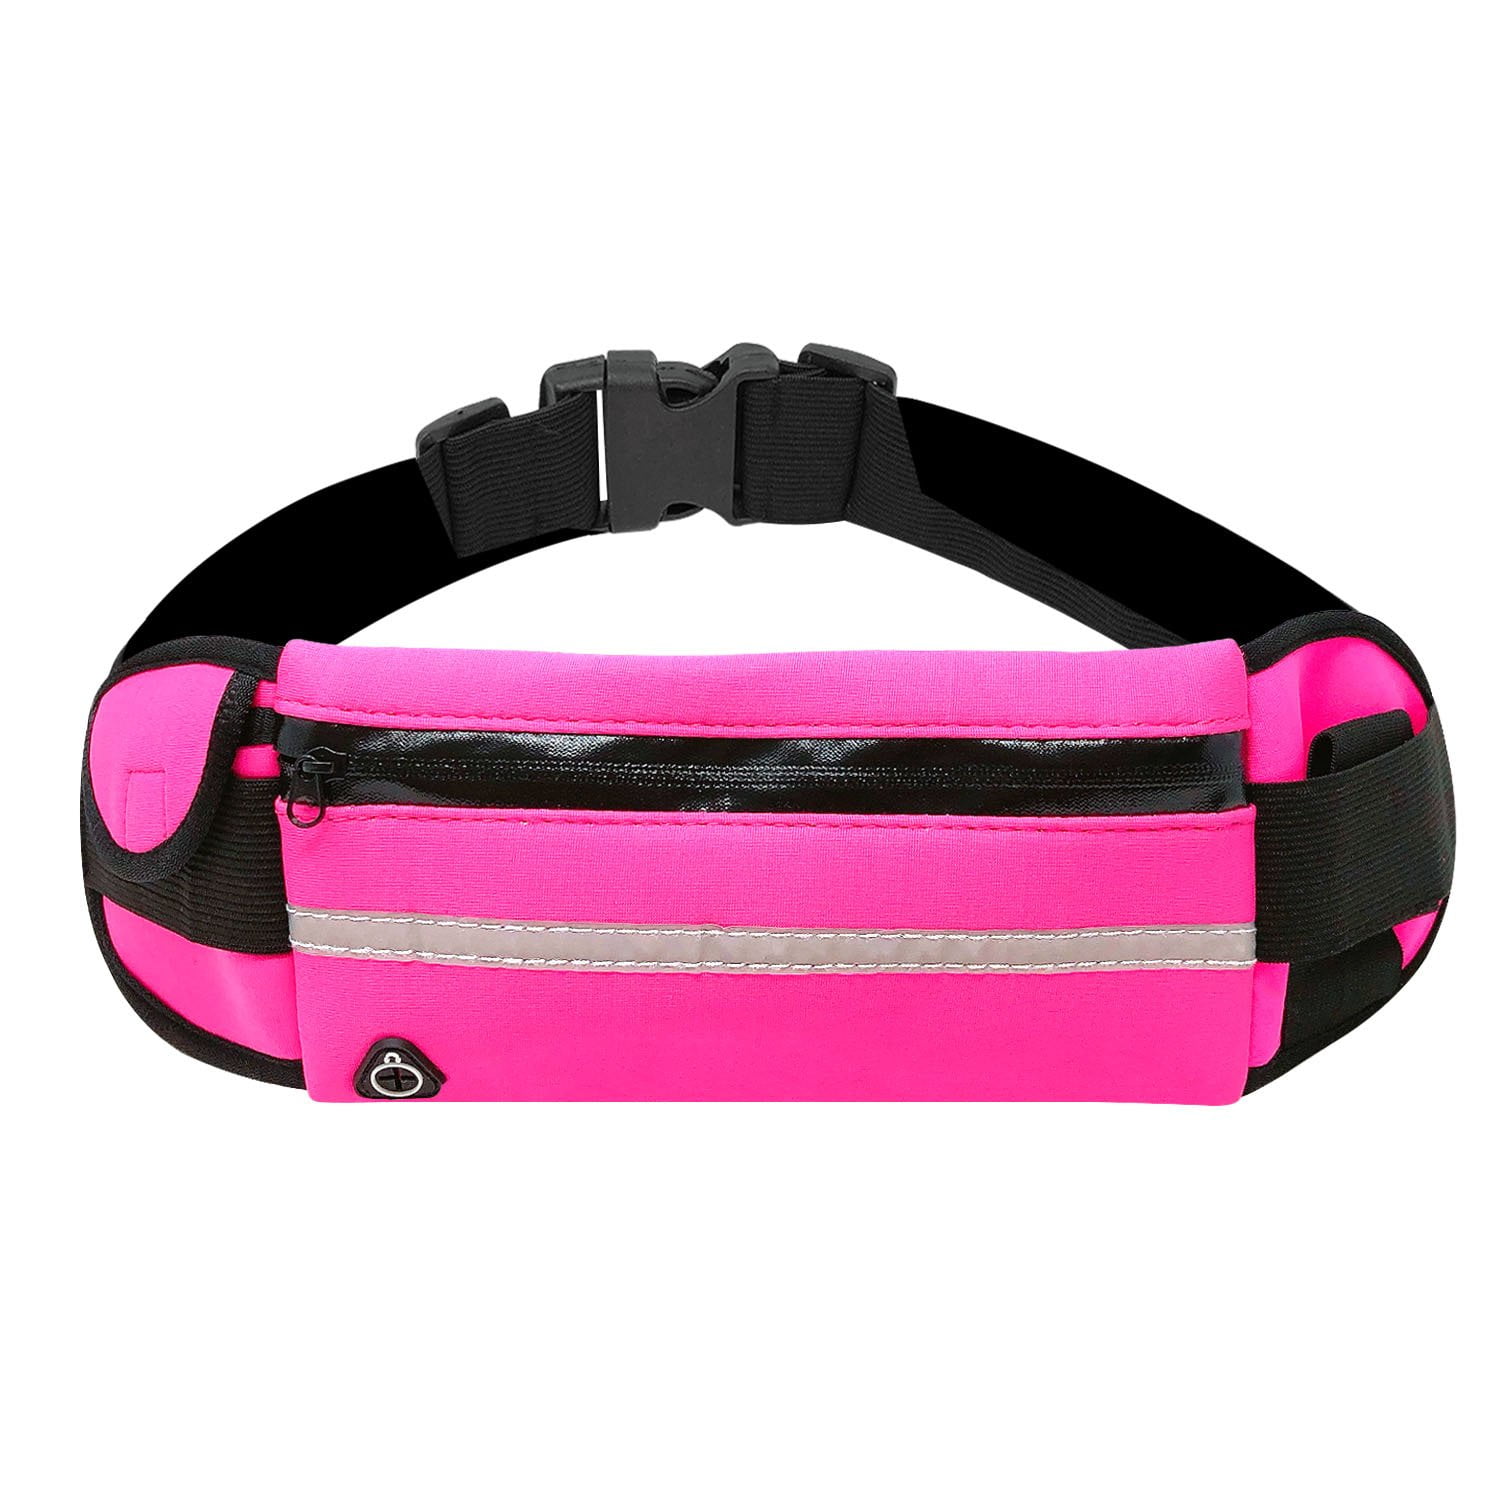 Lemuvlt Large Fanny Pack with Adjustable Strap for Running Hiking Travel Workout Dog Walking Outdoors Sport Fishing Waist Pack Bag